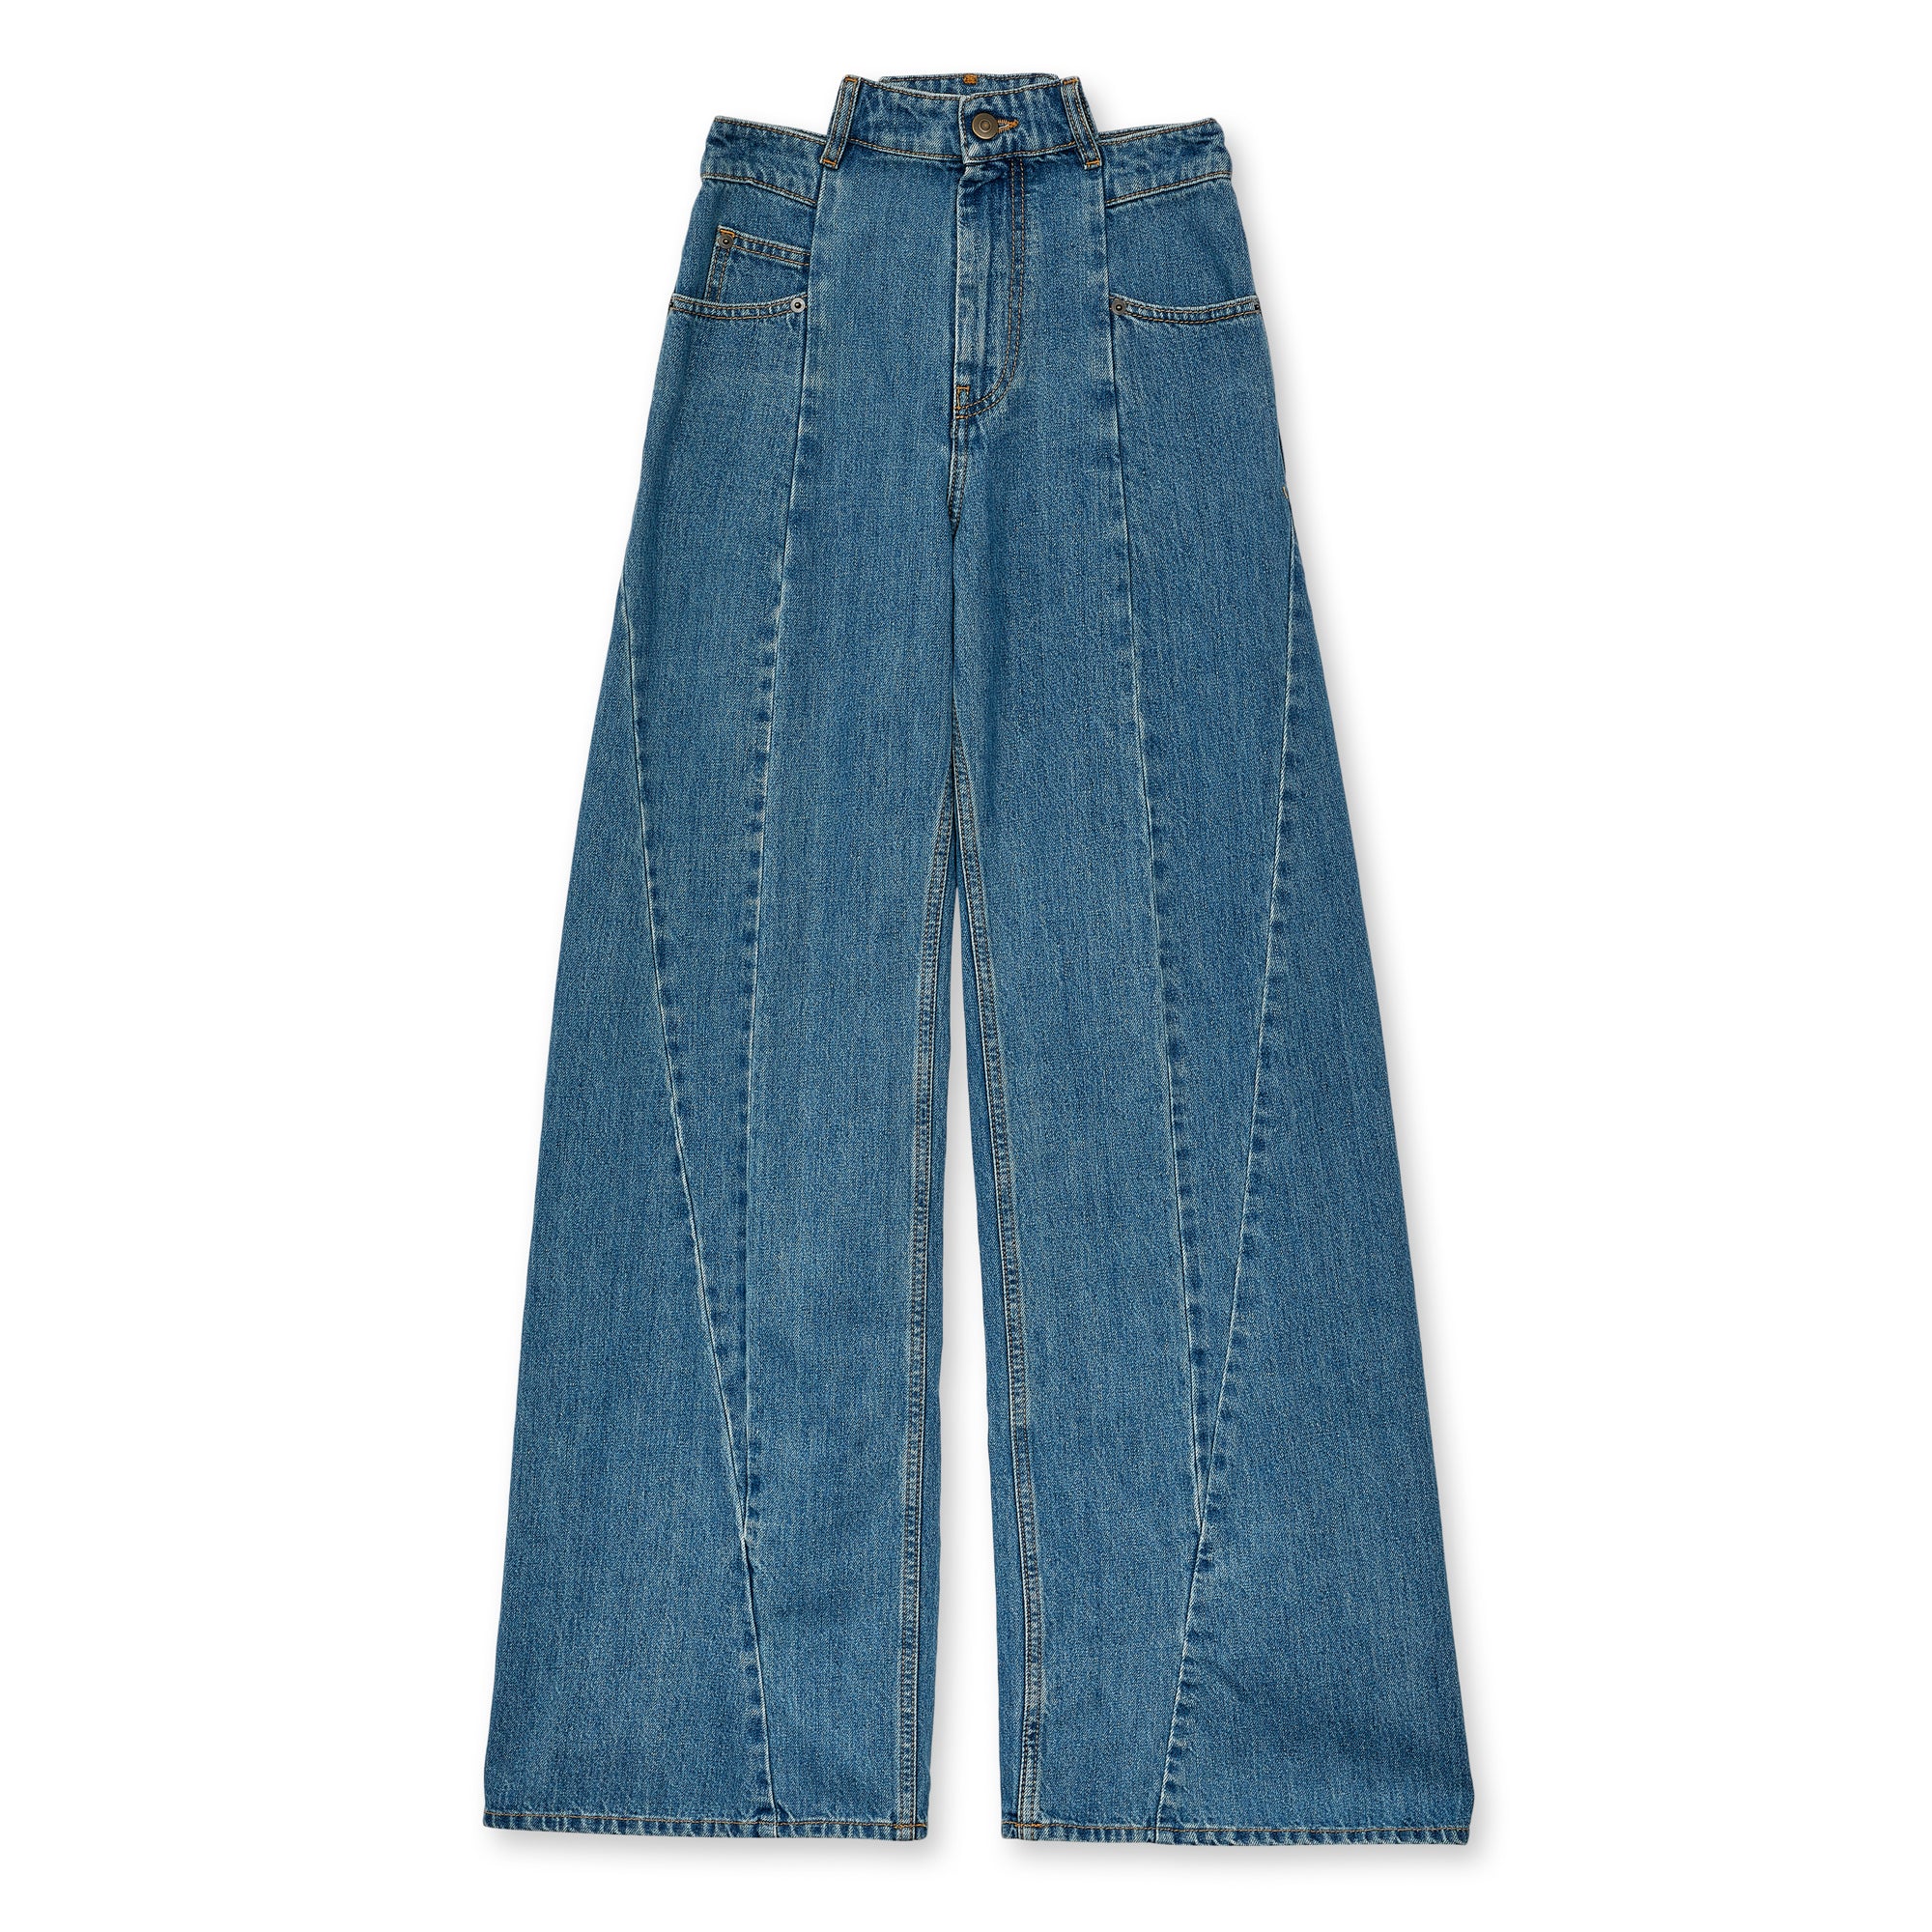 Margiela Denim APE Pants 5 Pocket L's Wash Jean - Light Blue